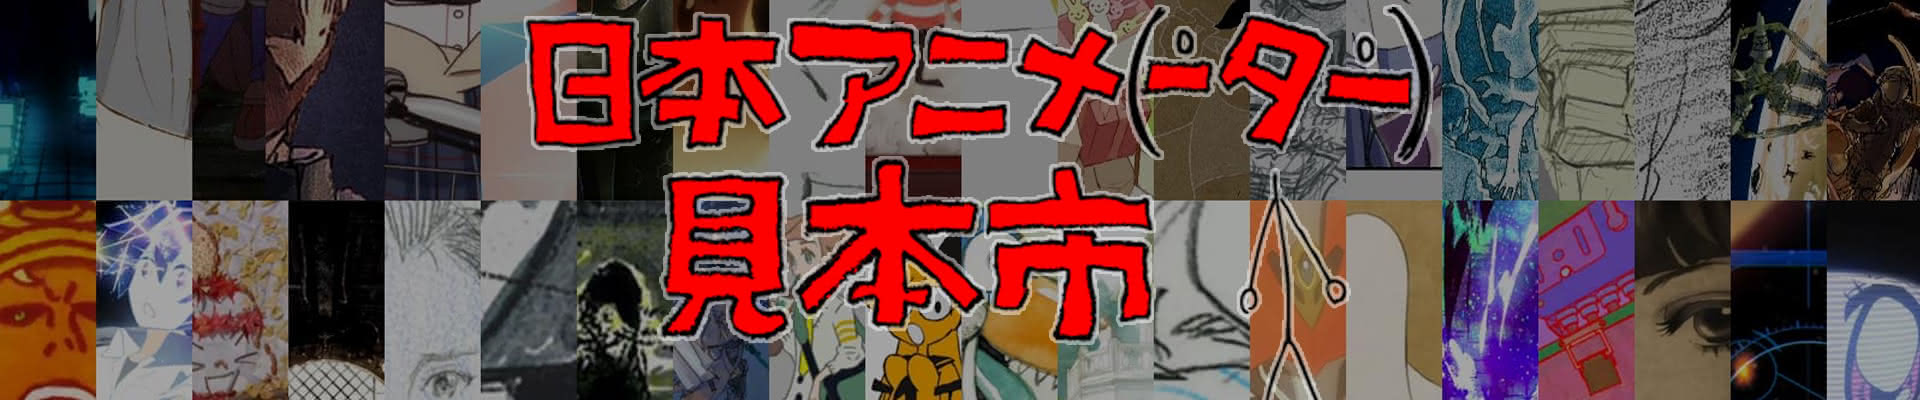 Nihon Animator Mihonichi - OAV 3 saison 1 | Neko-san